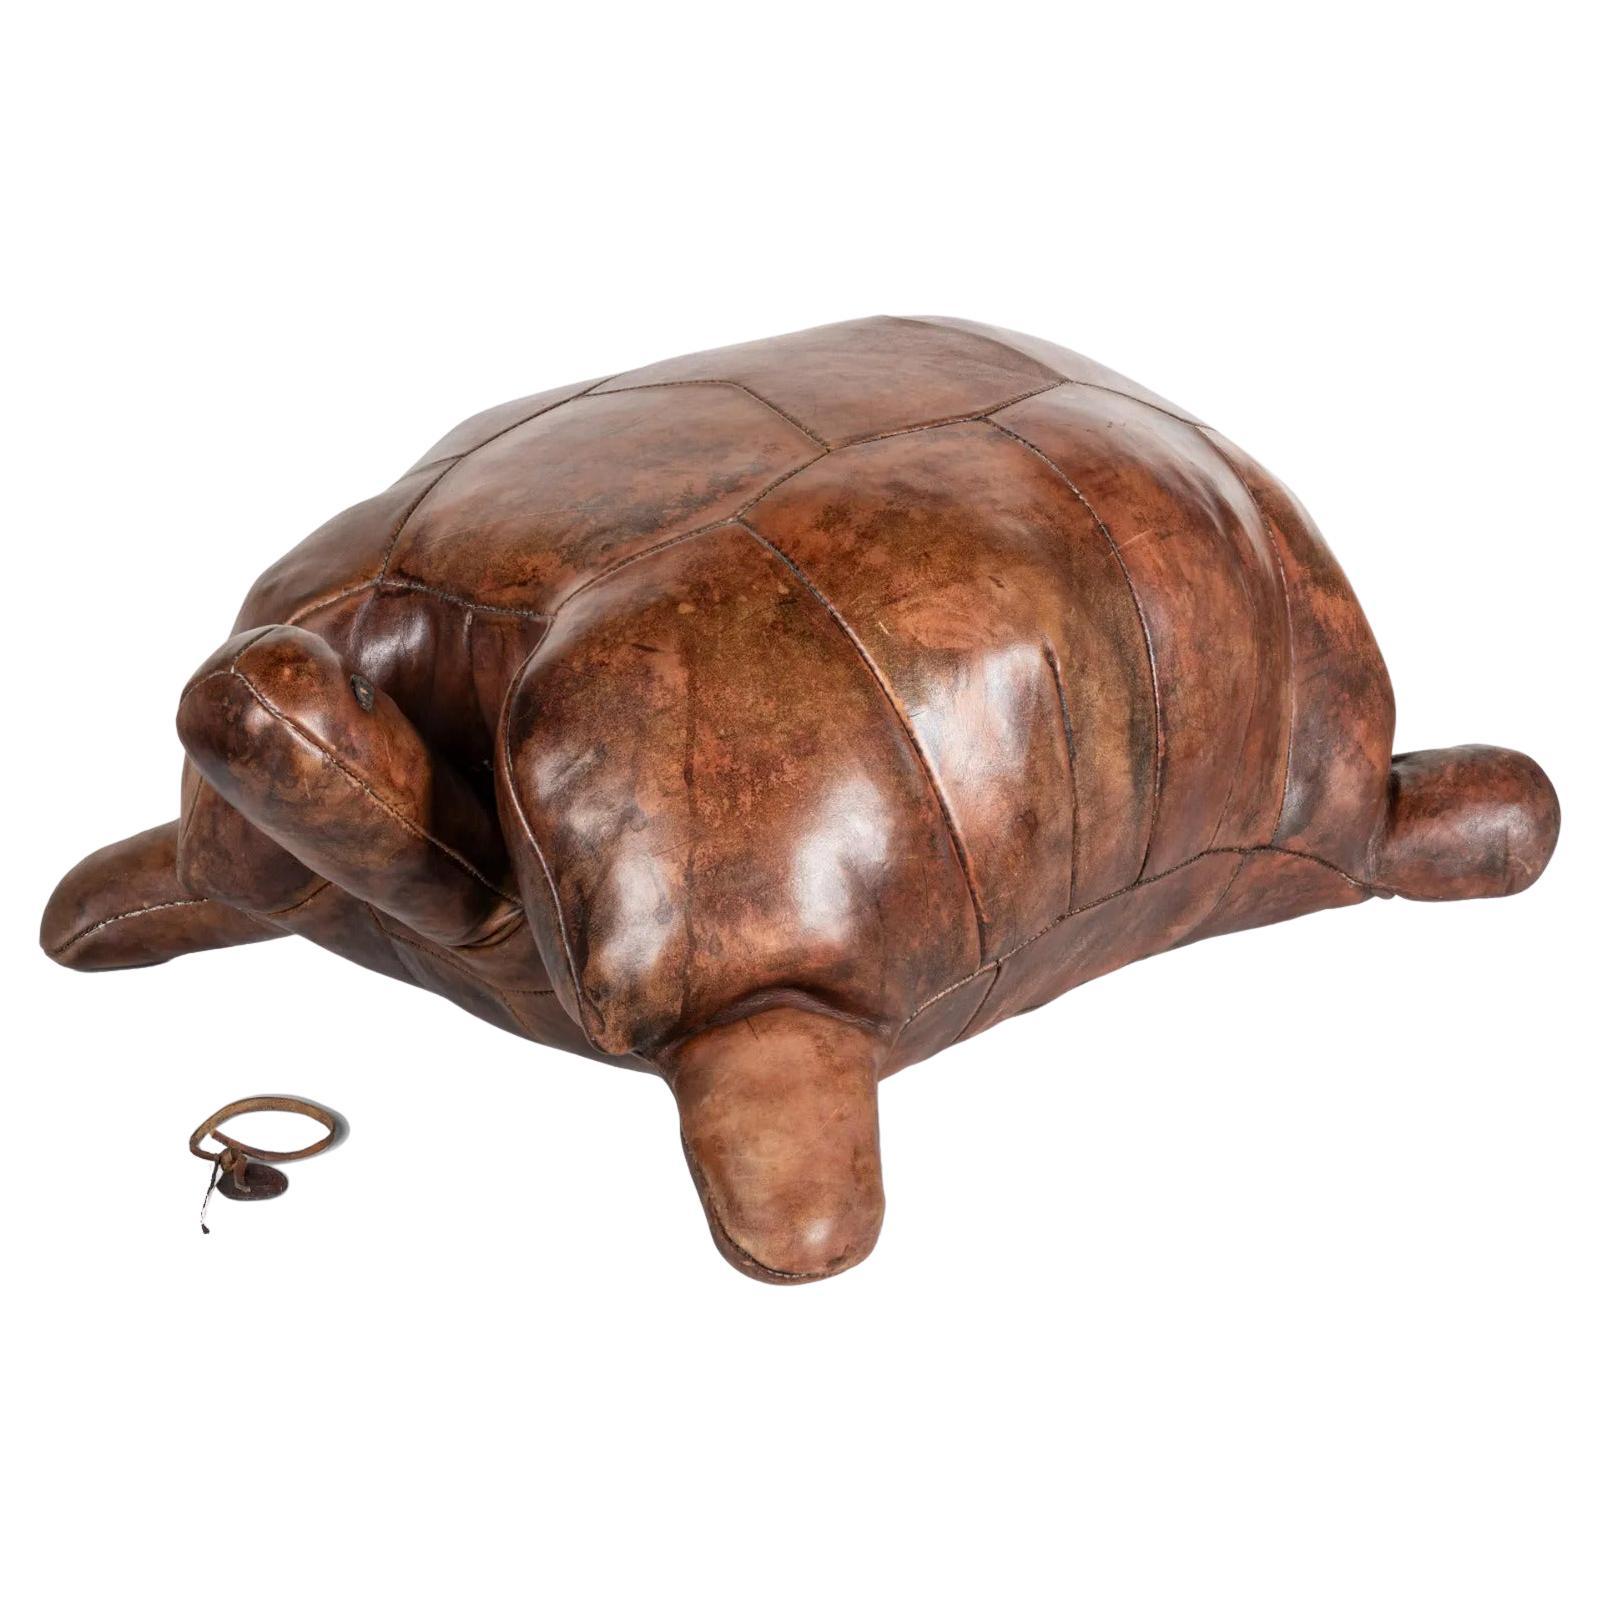 https://a.1stdibscdn.com/leather-turtle-foot-stool-or-ottoman-dimitri-omersa-1970s-for-sale/f_8610/f_306477621664545679910/f_30647762_1664545680414_bg_processed.jpg